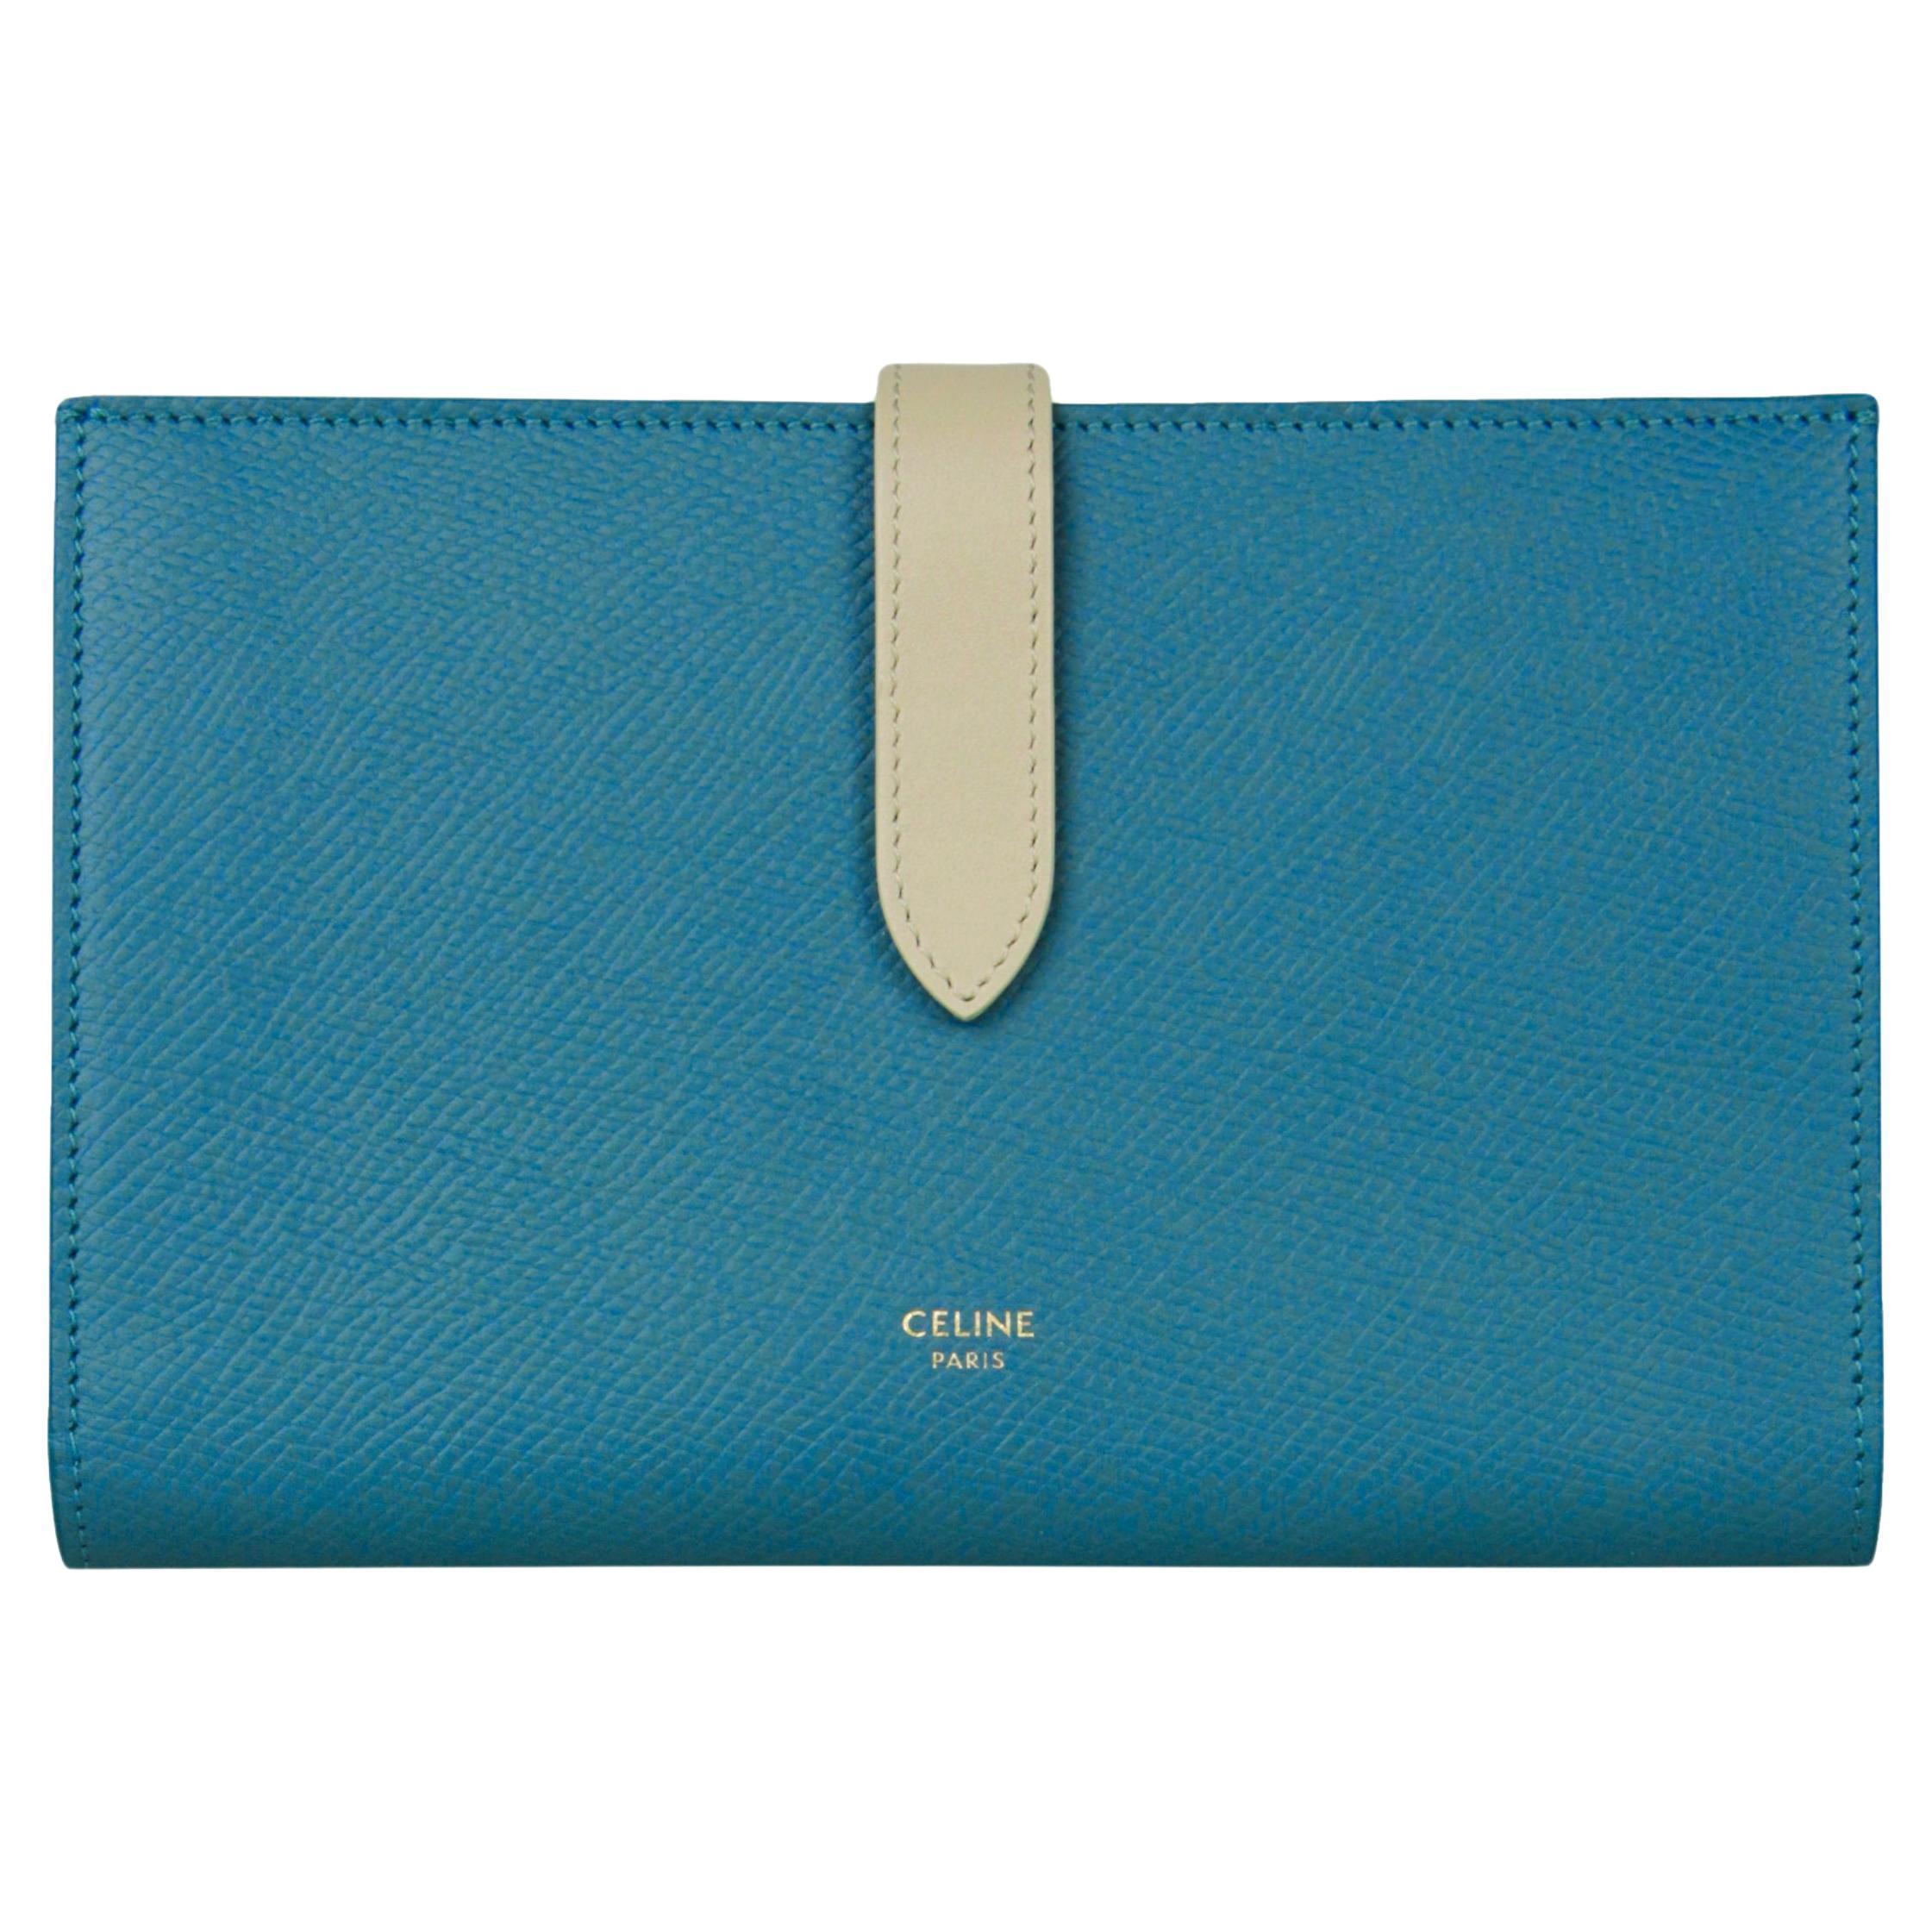 Celine Blue/Beige Calfskin Large Multifunction Snap Wallet